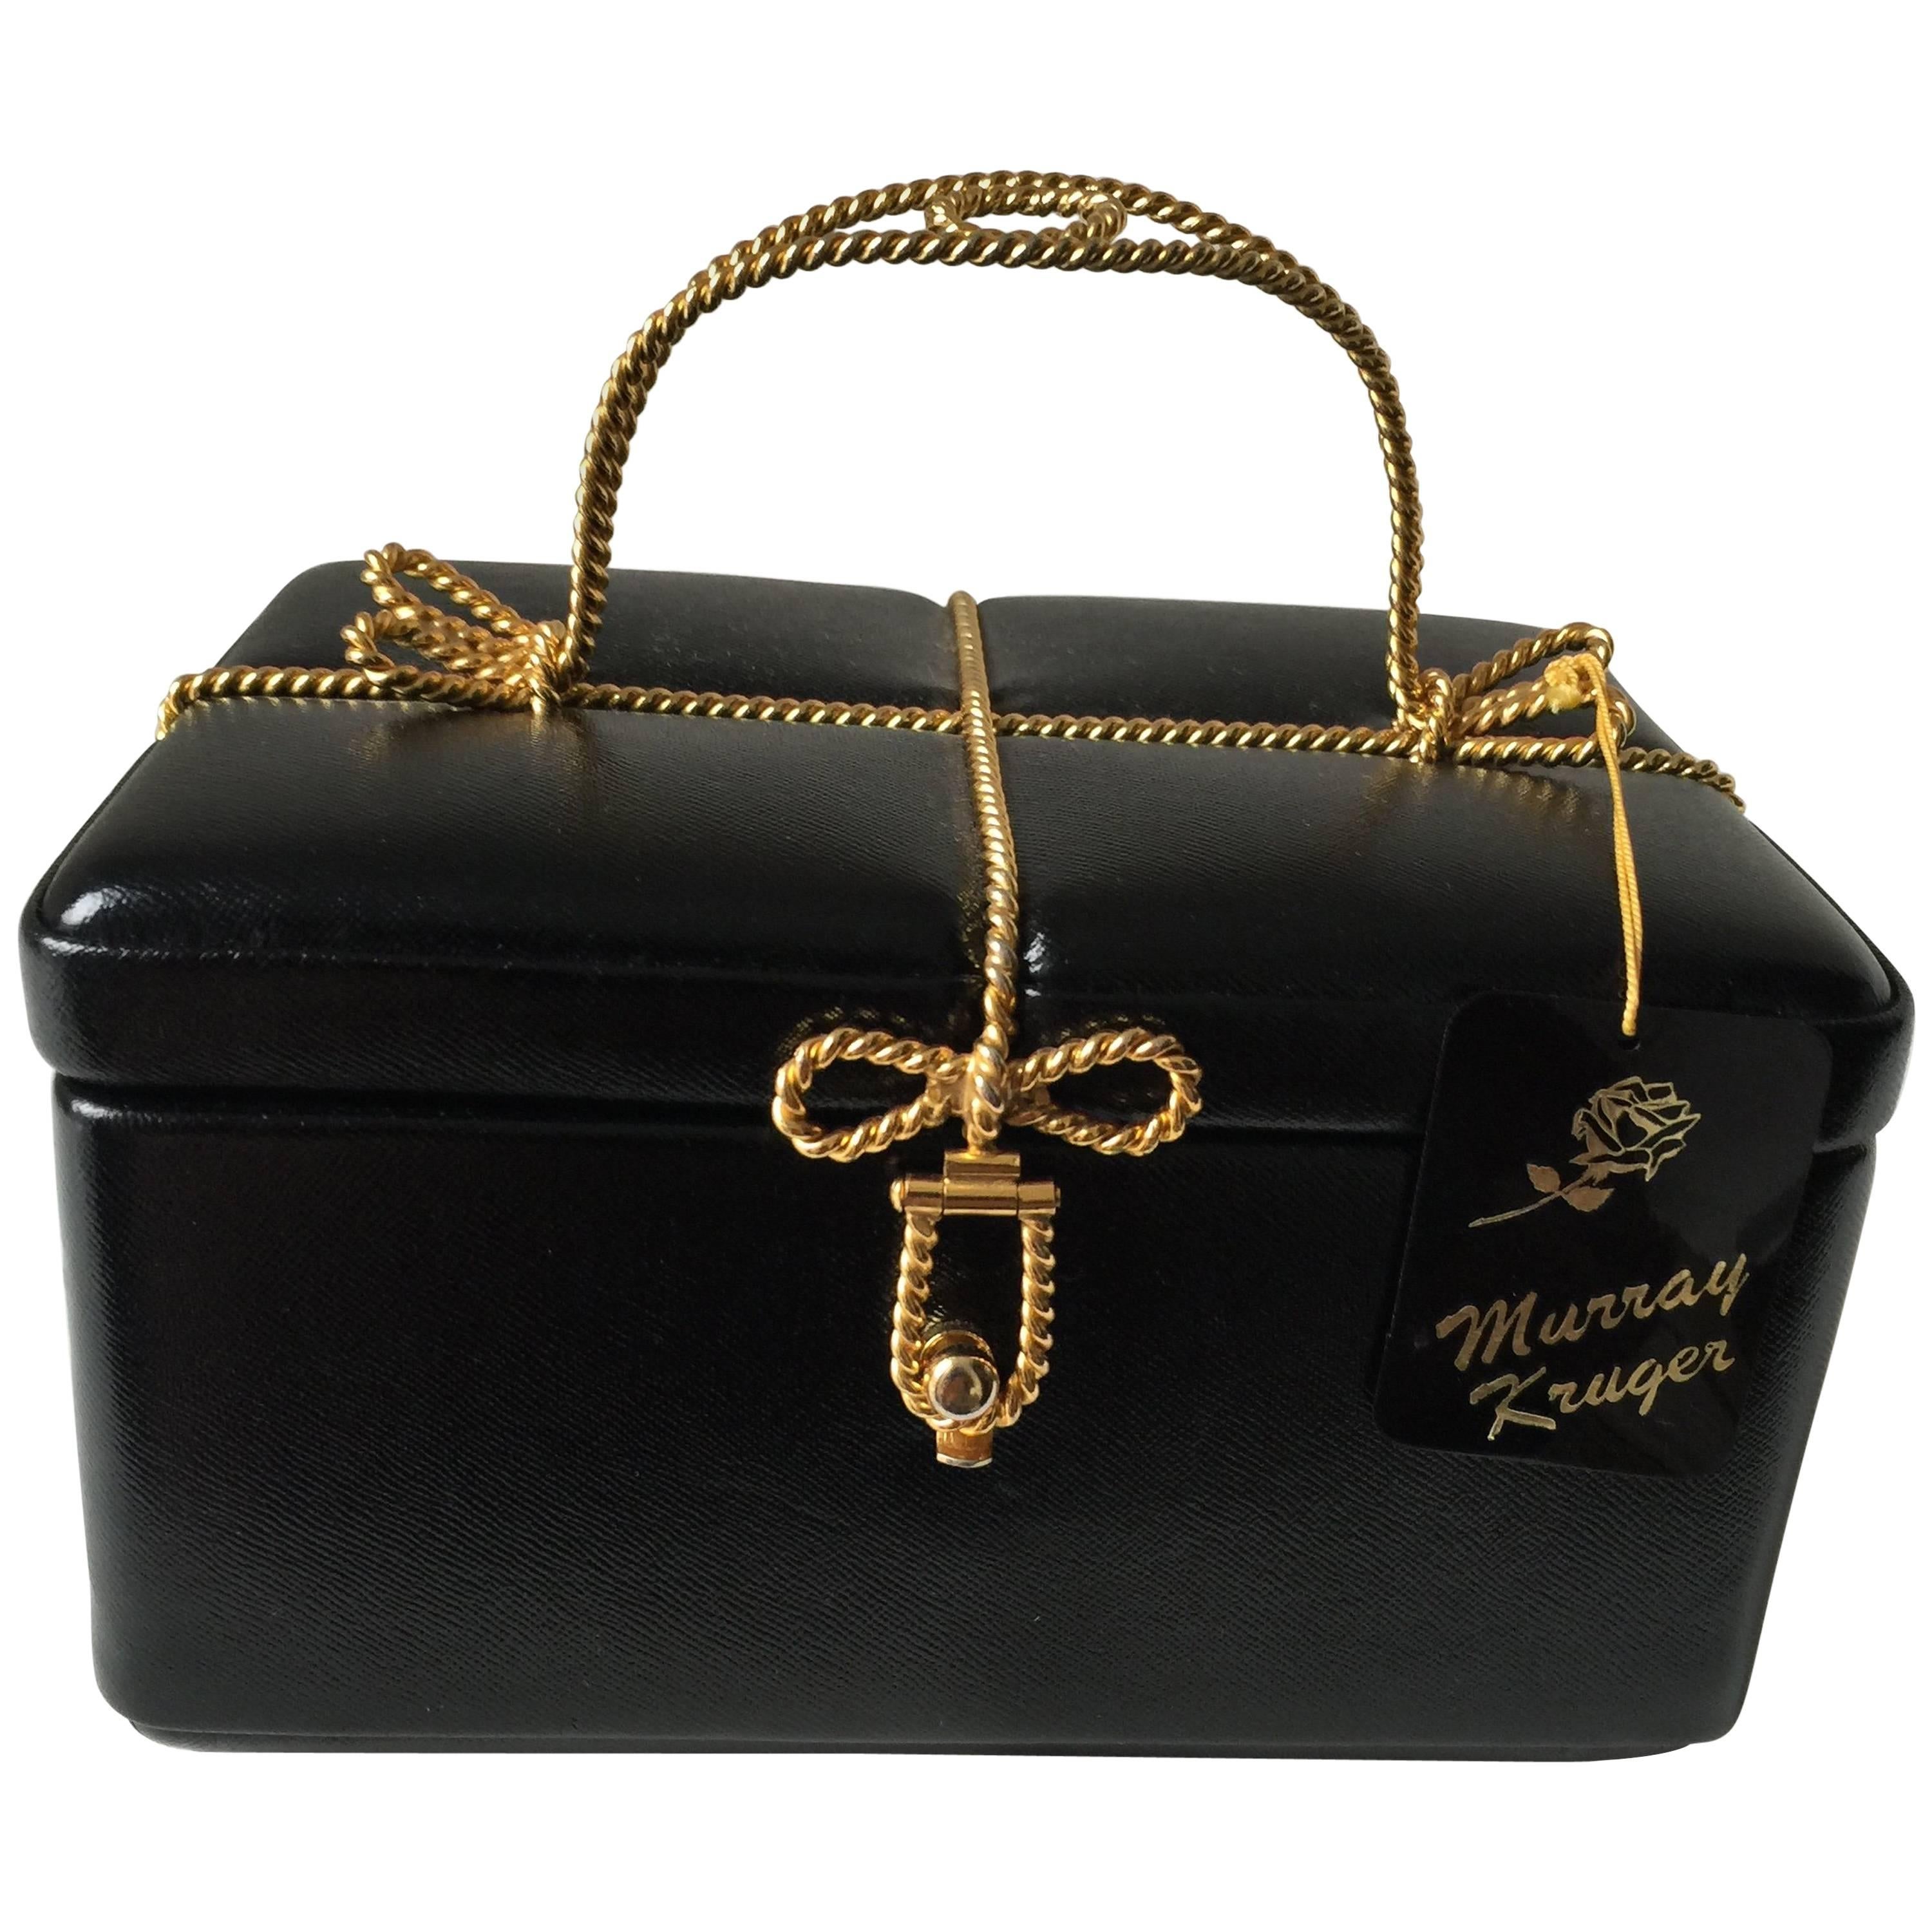 Exquisite Murray Kruger Black Leather  Gift Box Handbag